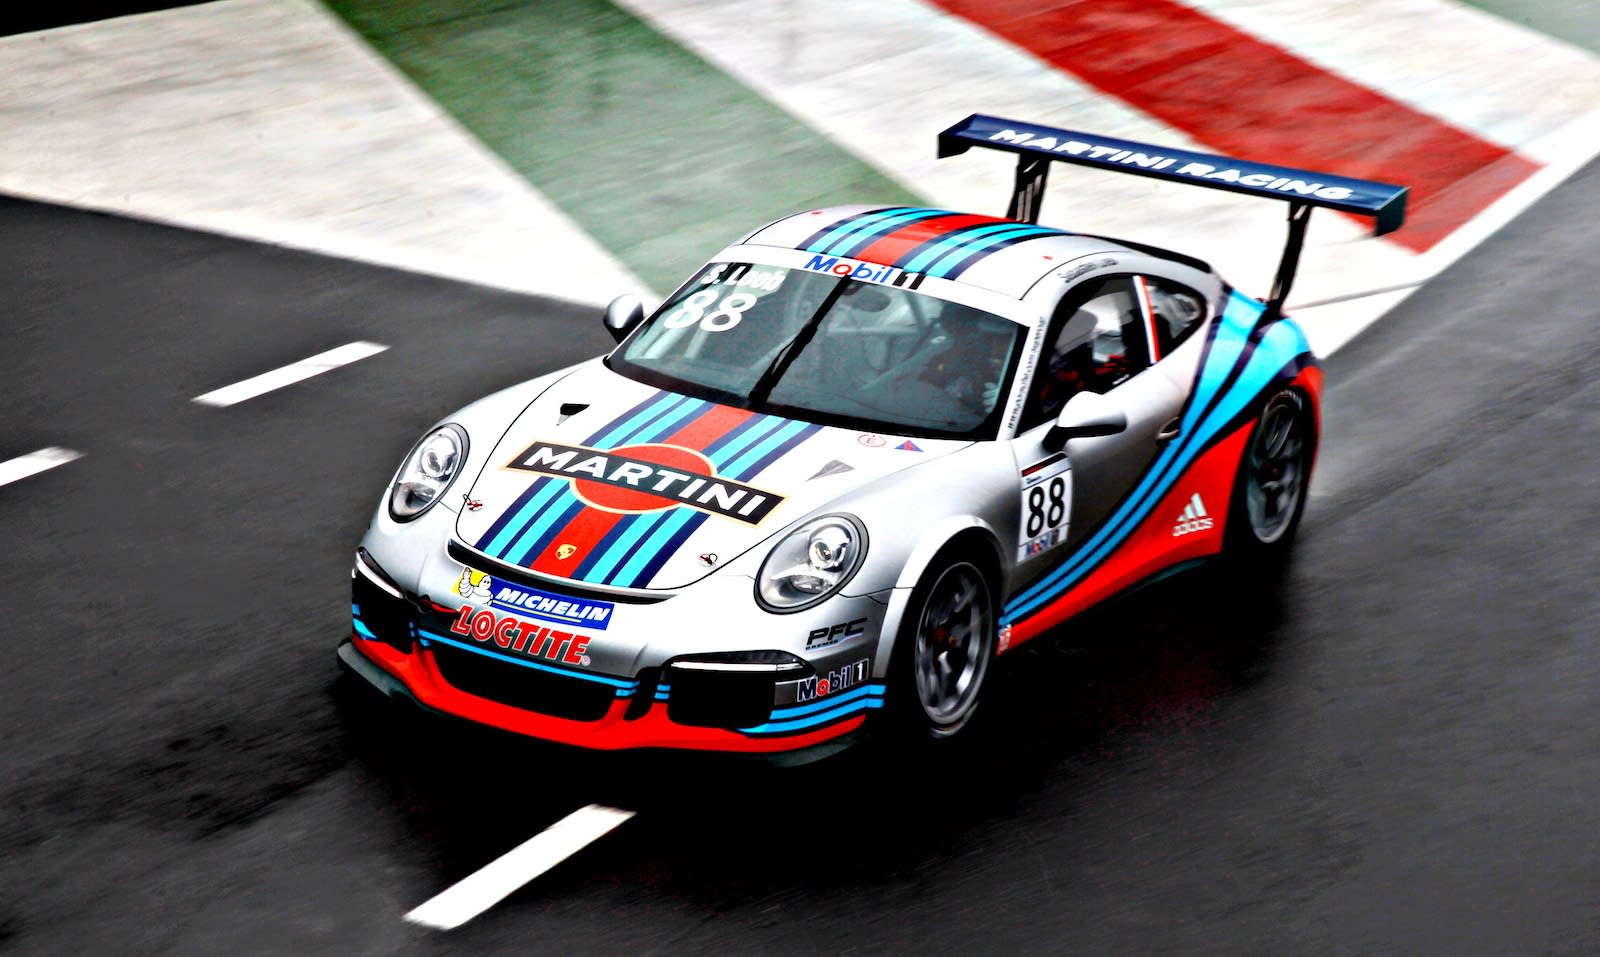 Porsche, Martini revive iconic relationship for 2013 - Drive